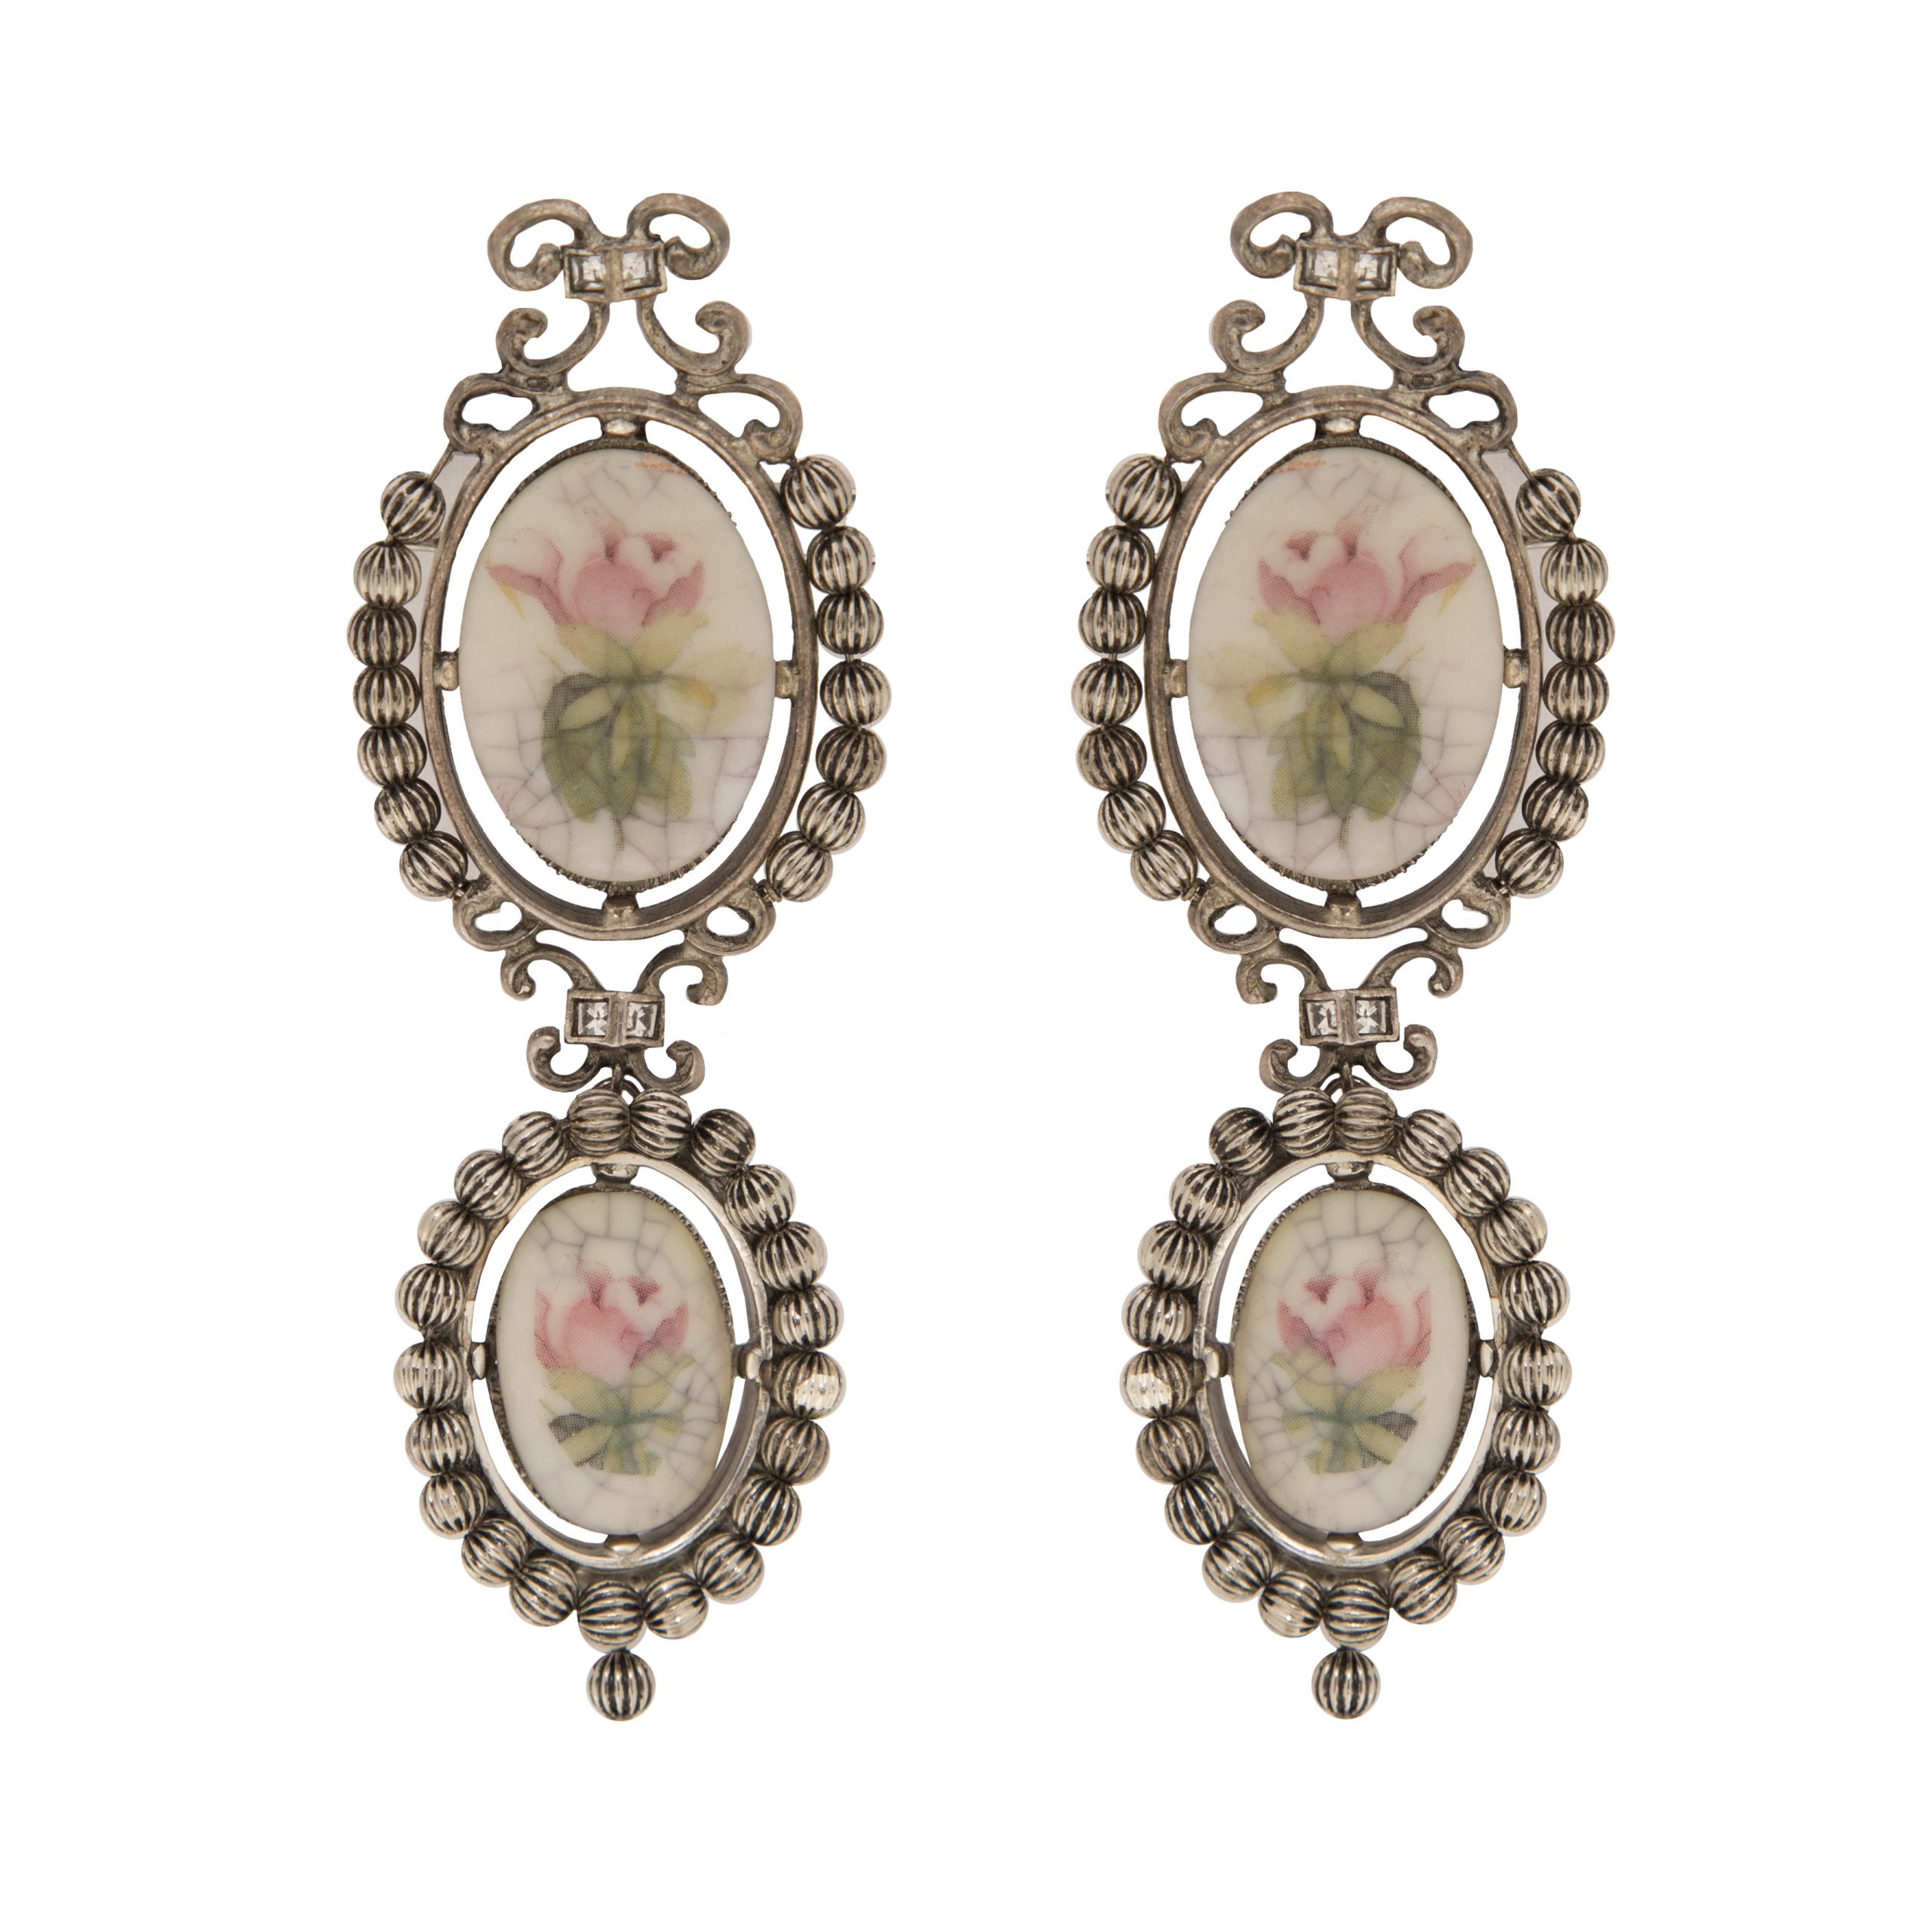 Vintage haute couture porcelain cameo earrings